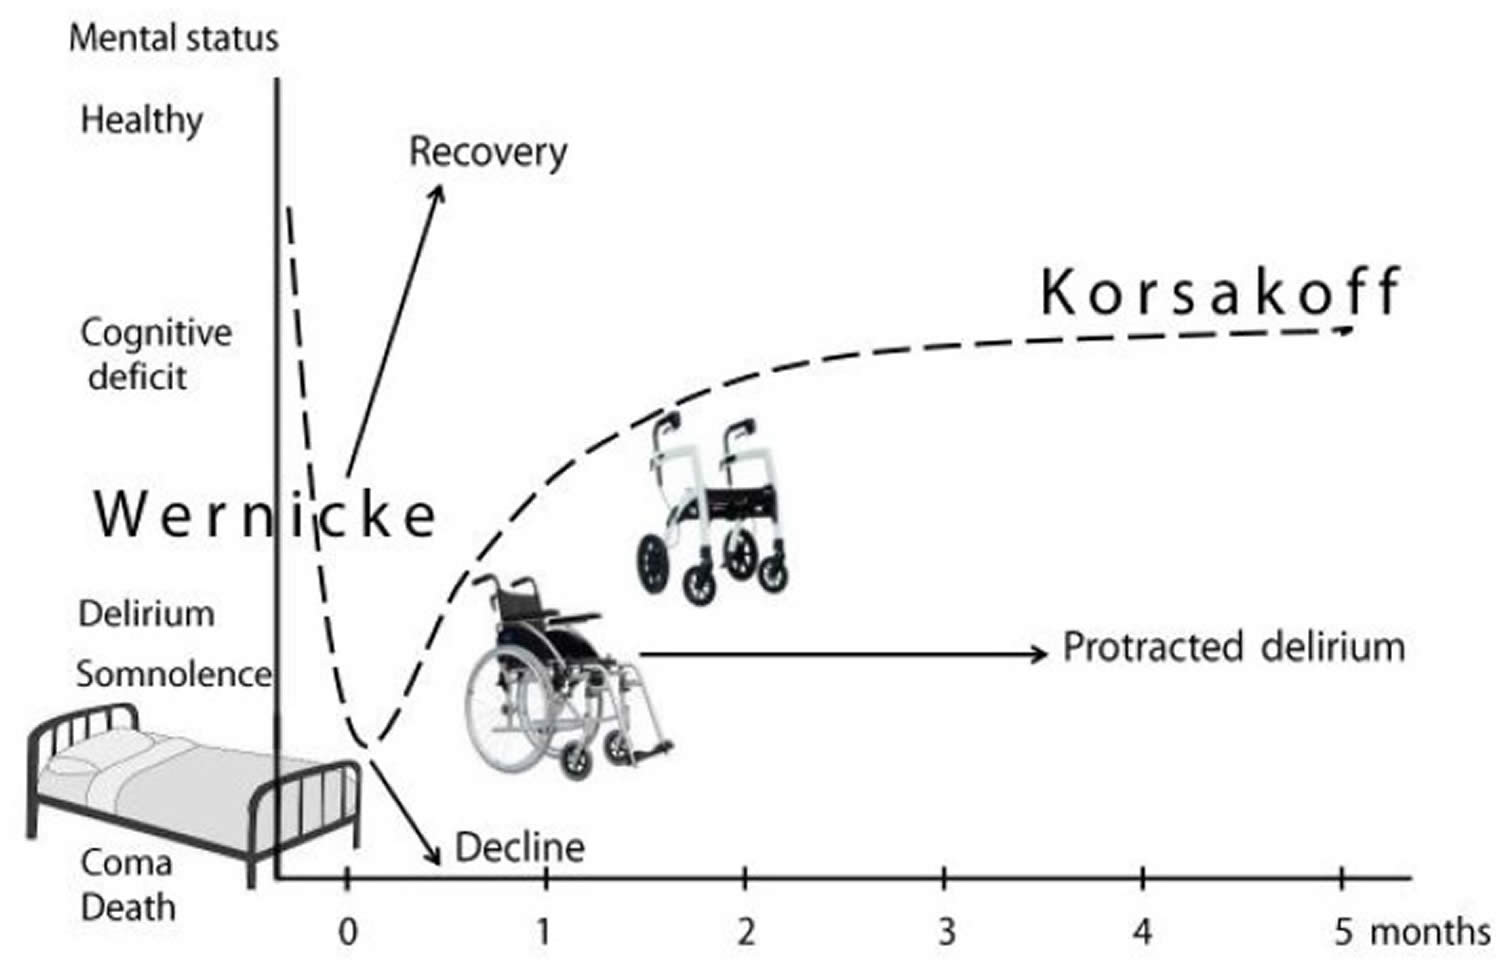 Wernicke-Korsakoff syndrome